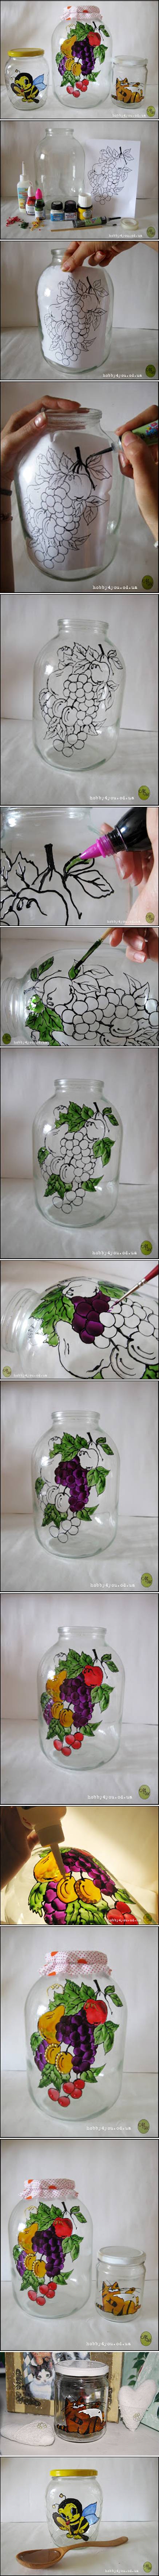 DIY Painting Decororation on Glass Jar